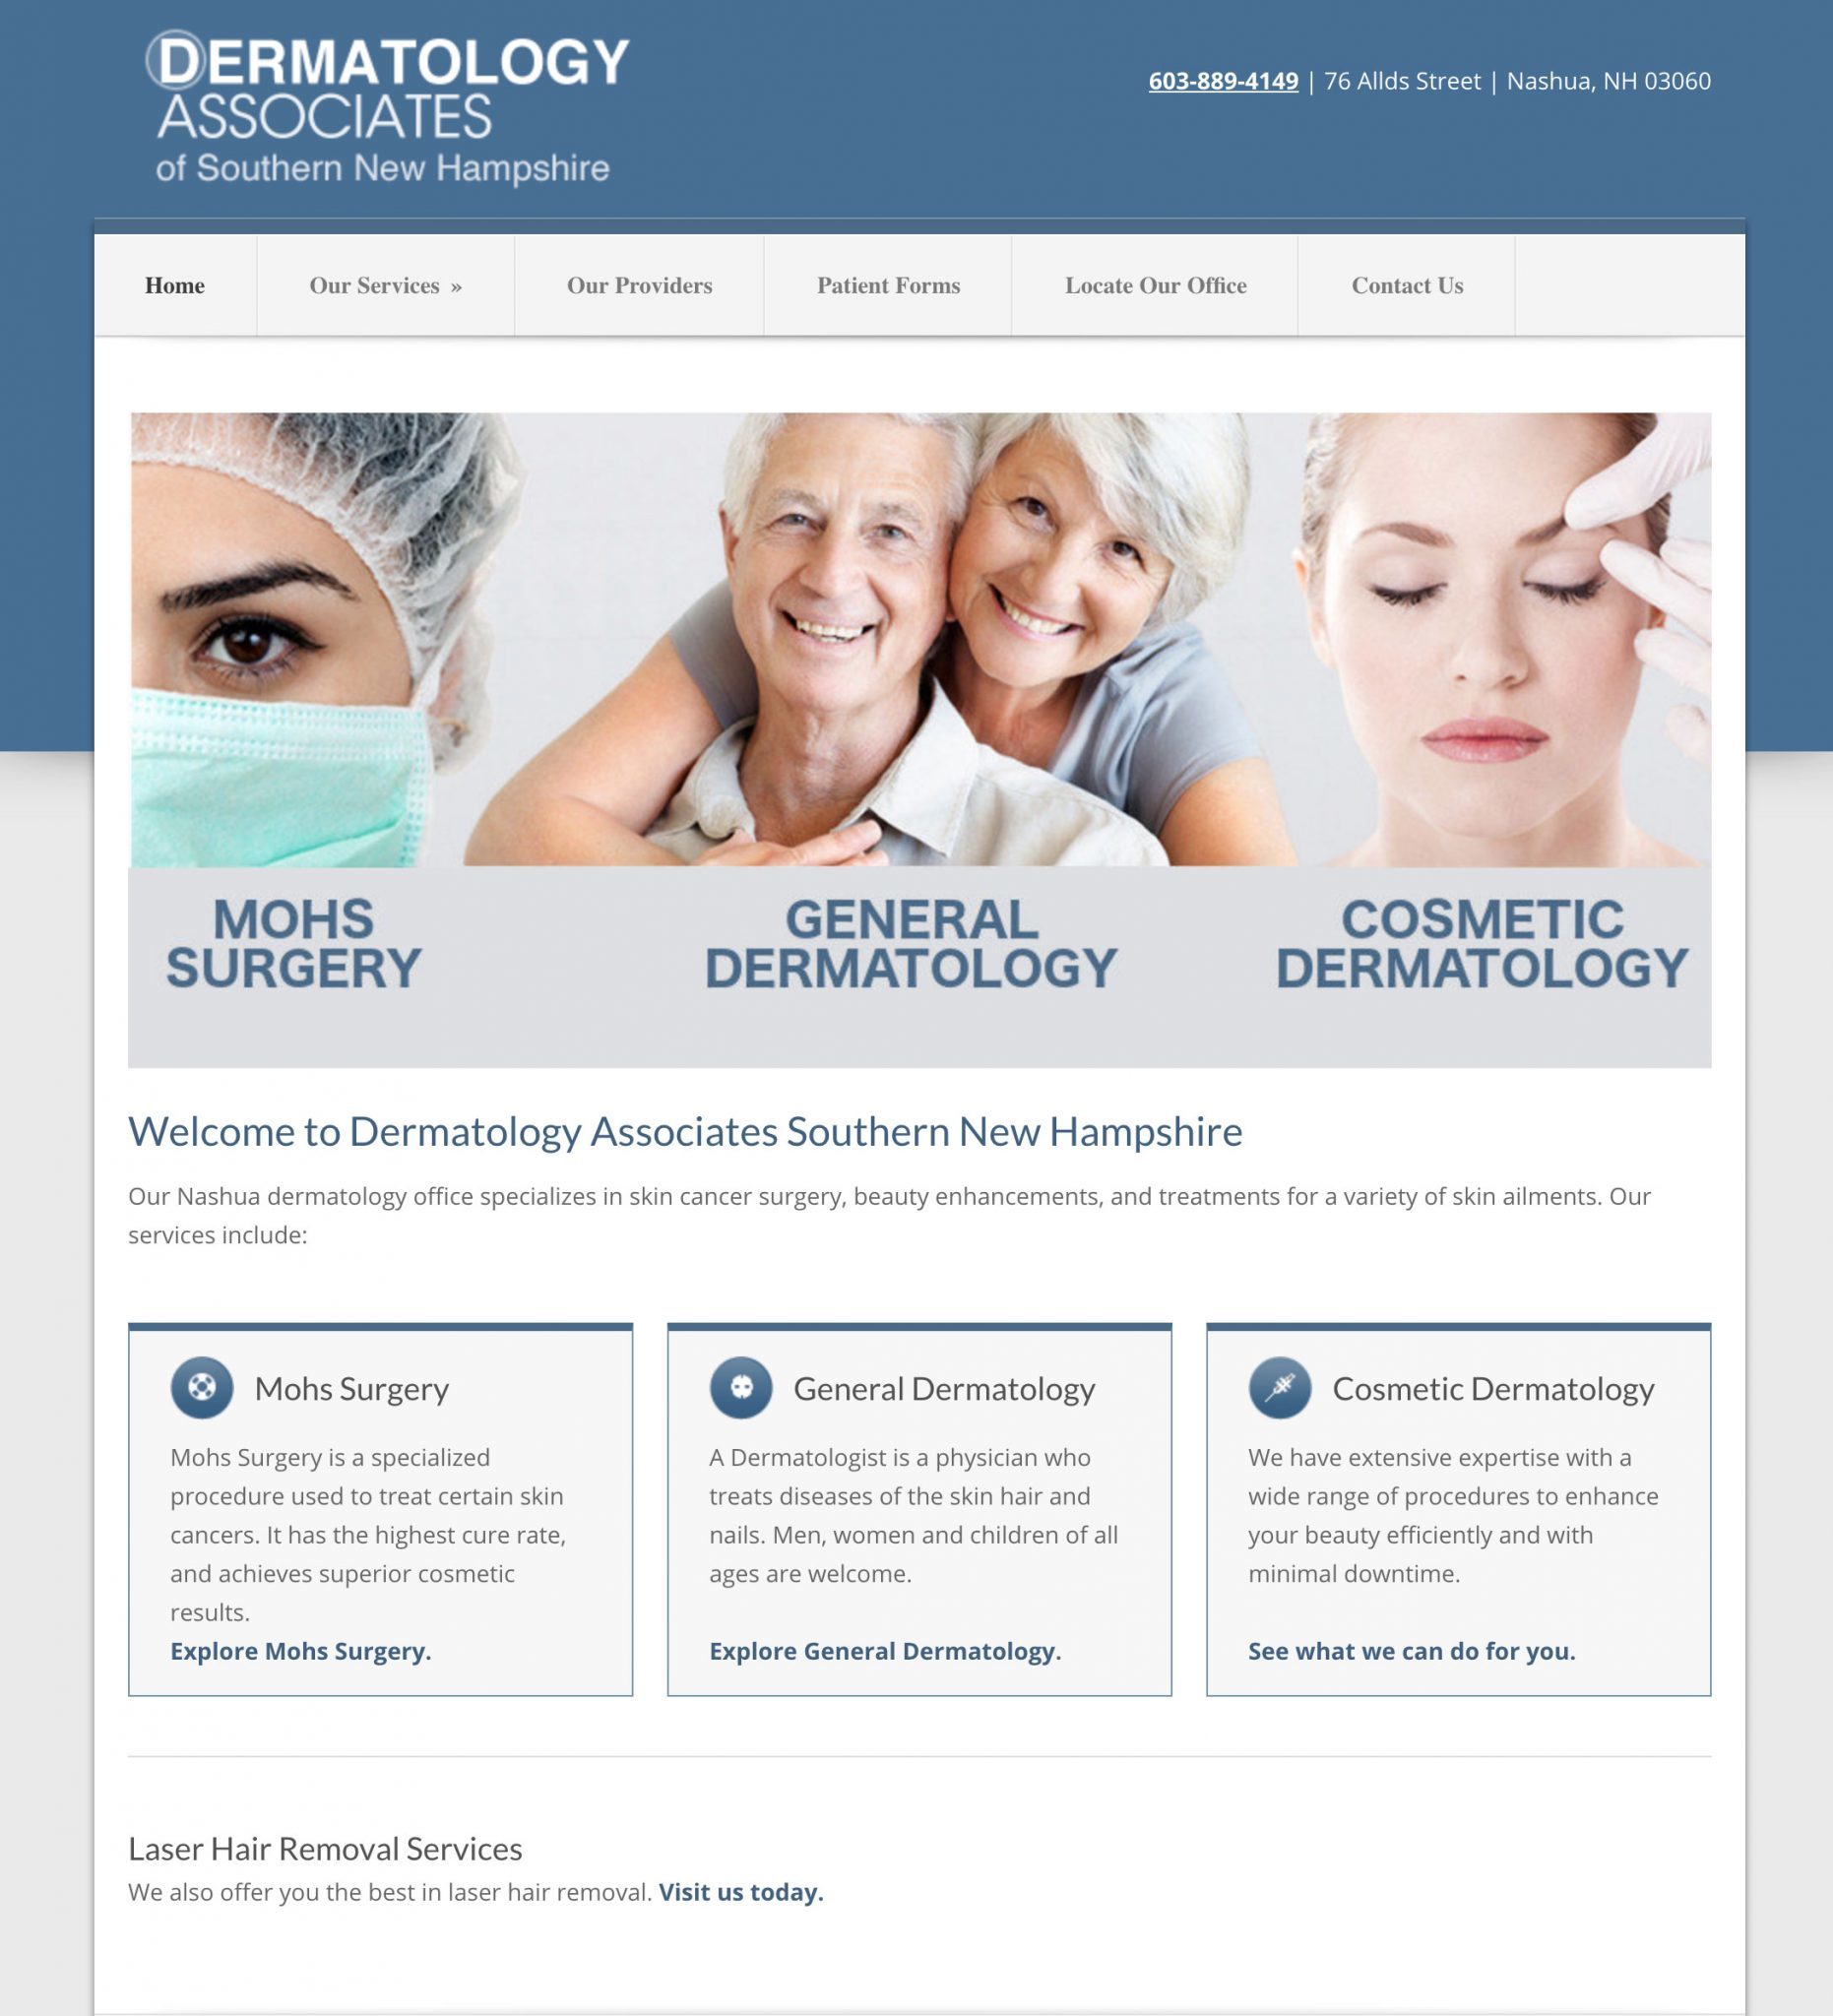 Dermatology Associates of Southern New Hampshire